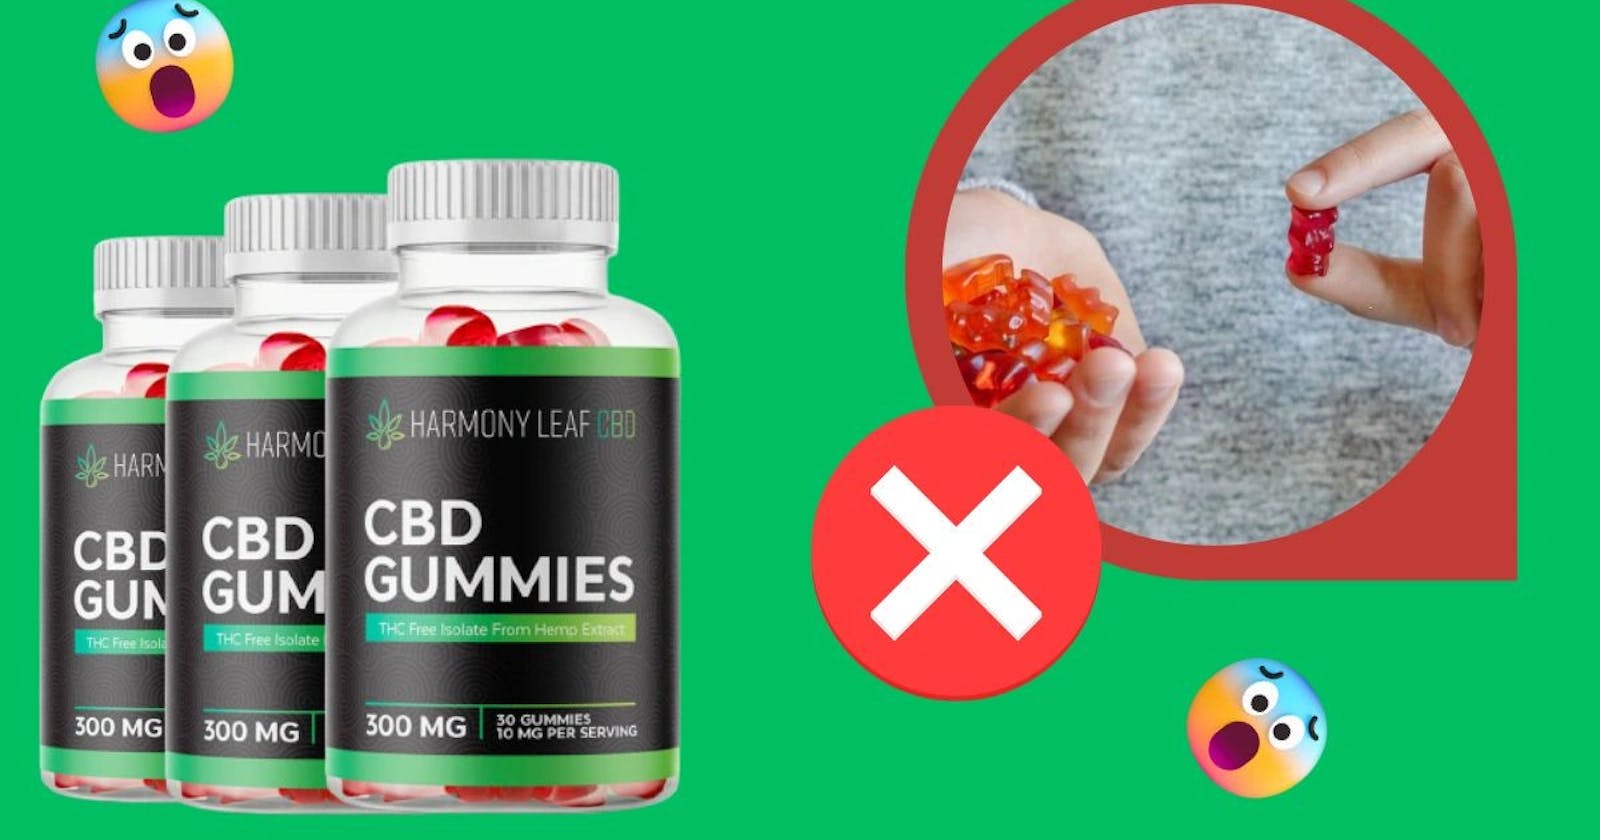 Harmony Leaf CBD Gummies - Multi Benefits Like Relieve Pain And Stress | Where to Buy?